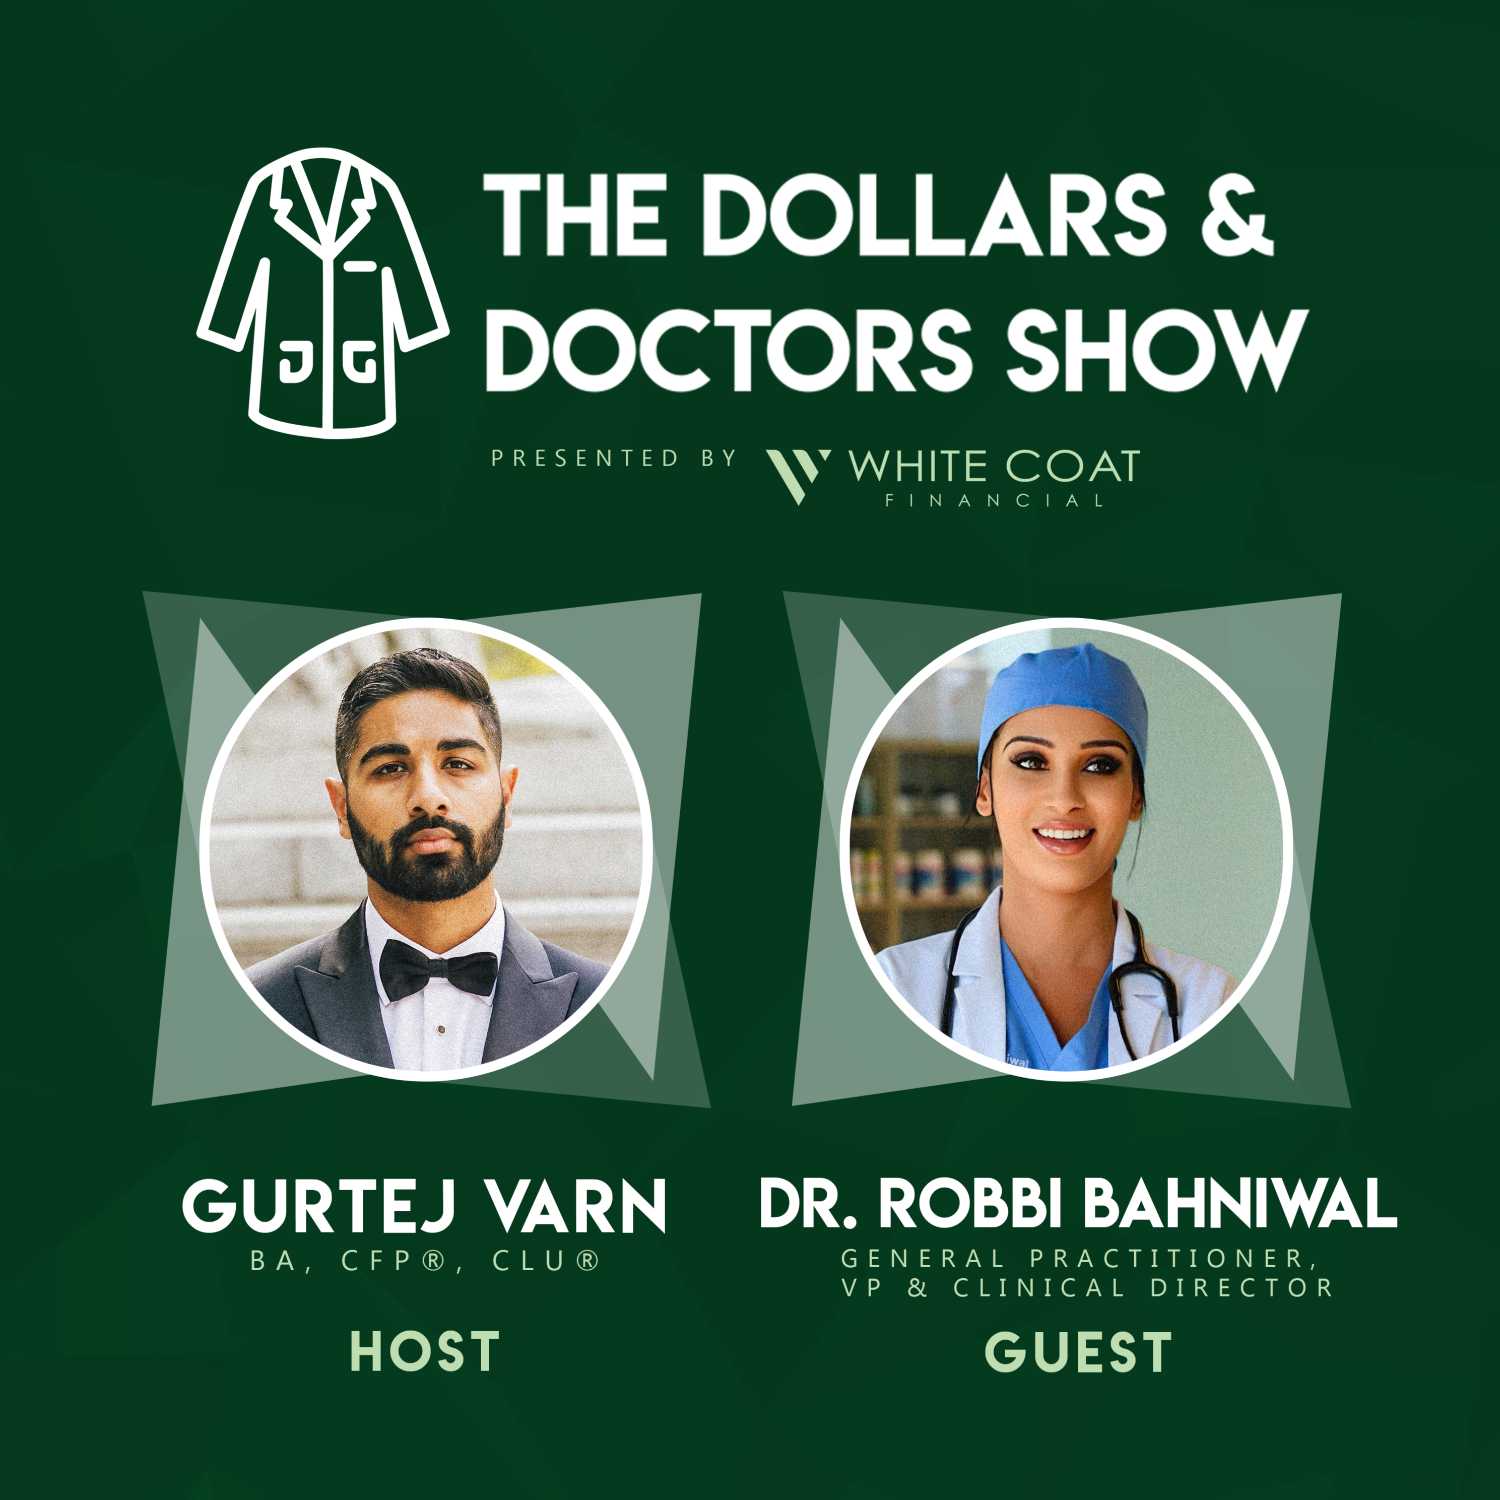 Episode 12: Dr. Robbi Bahniwal - Aesthetic Medicine & Diagnosing the Whole Patient